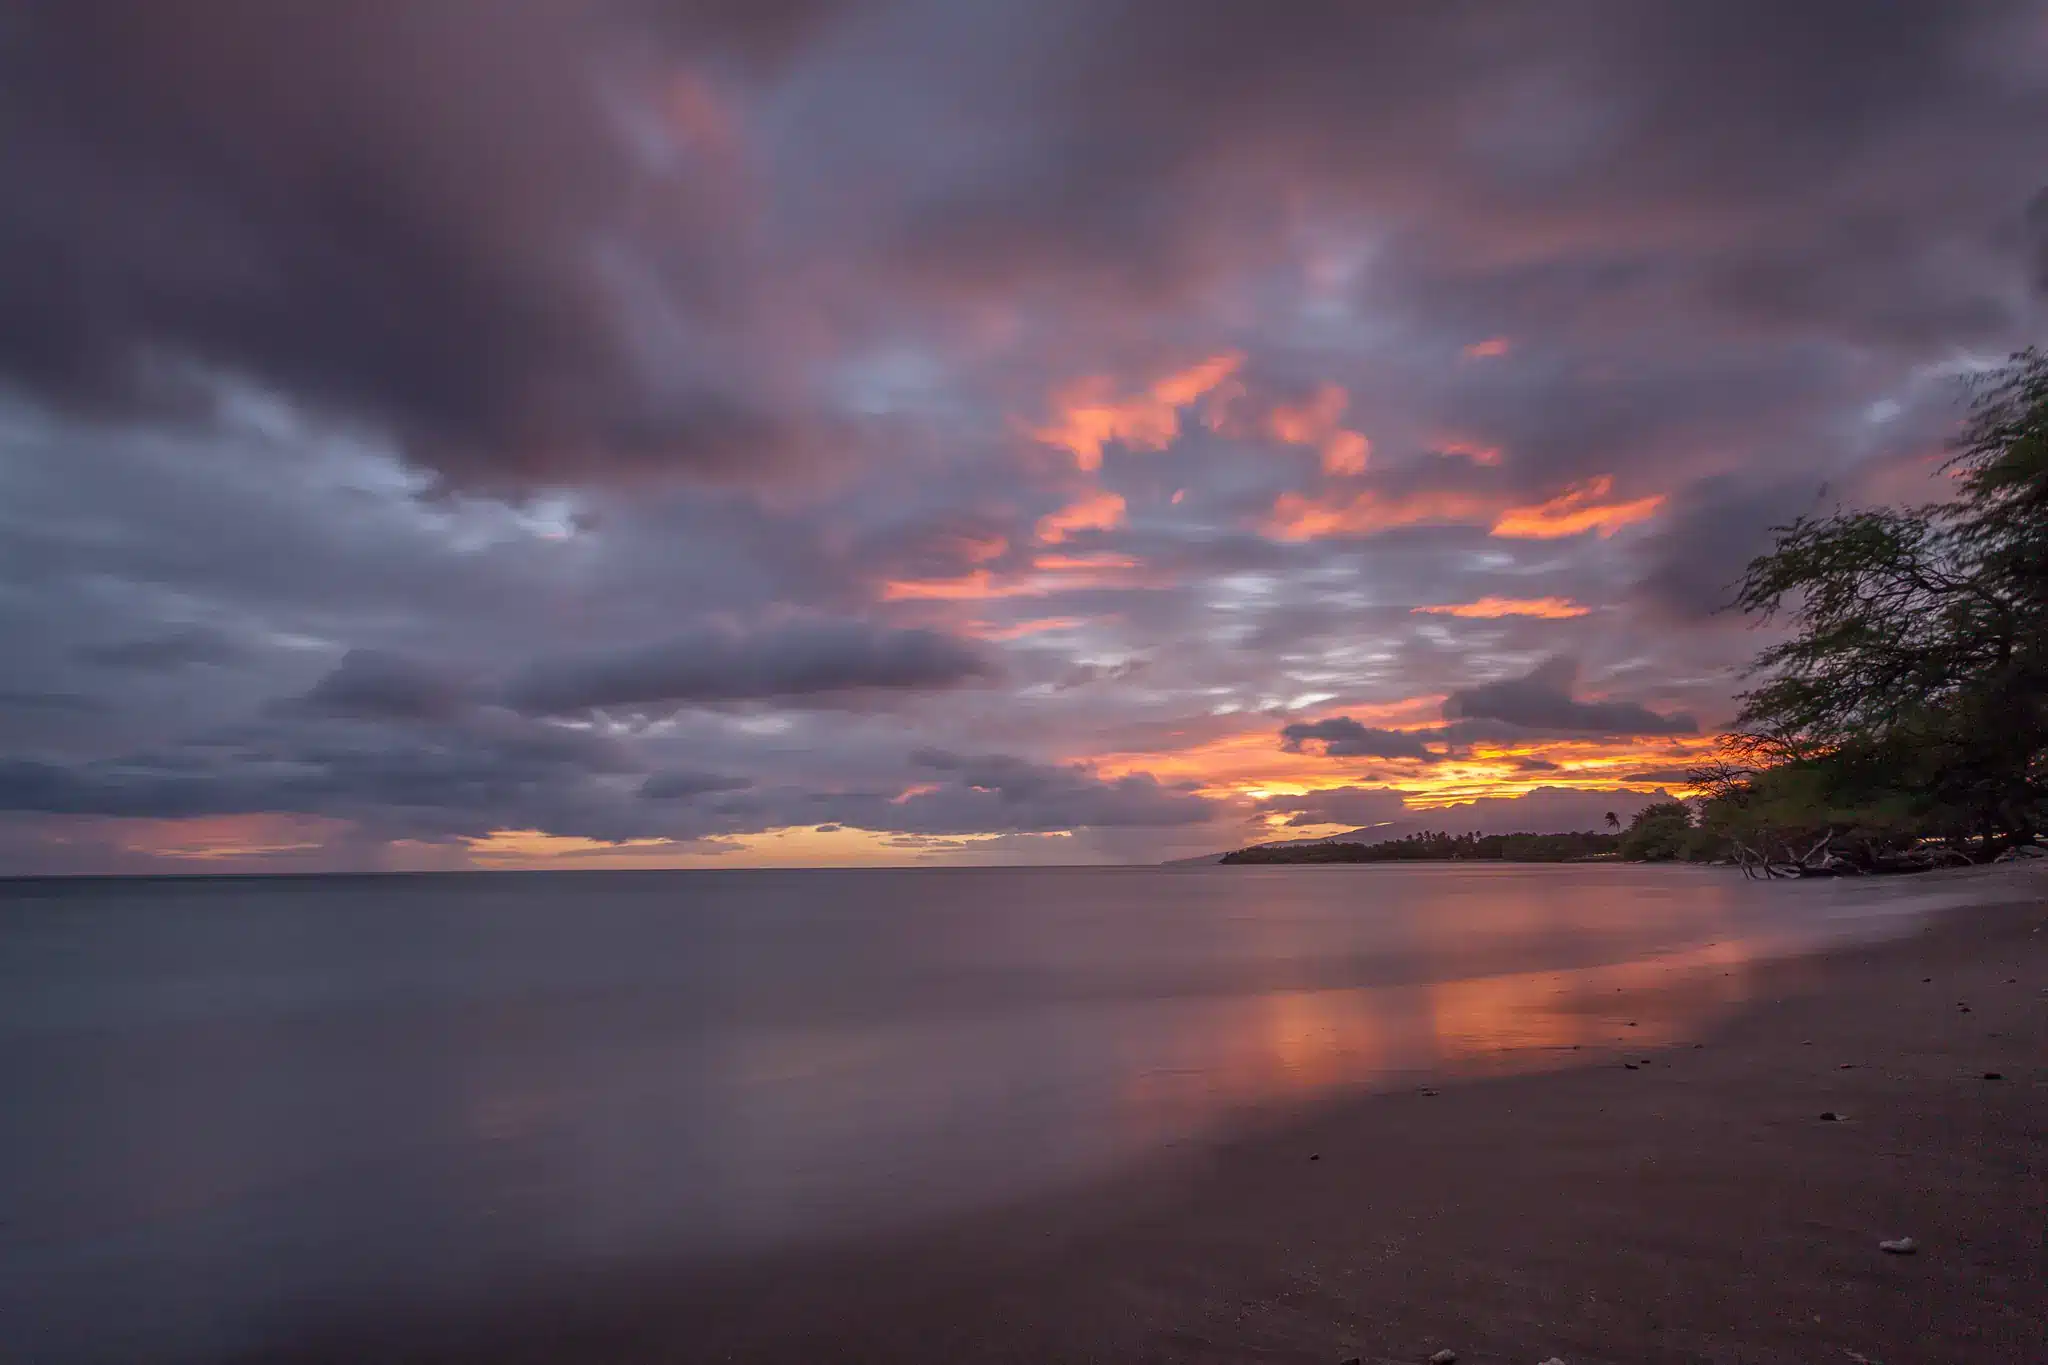 Ukumehame Beach Park is a Beach located in the city of Lahaina on Maui, Hawaii